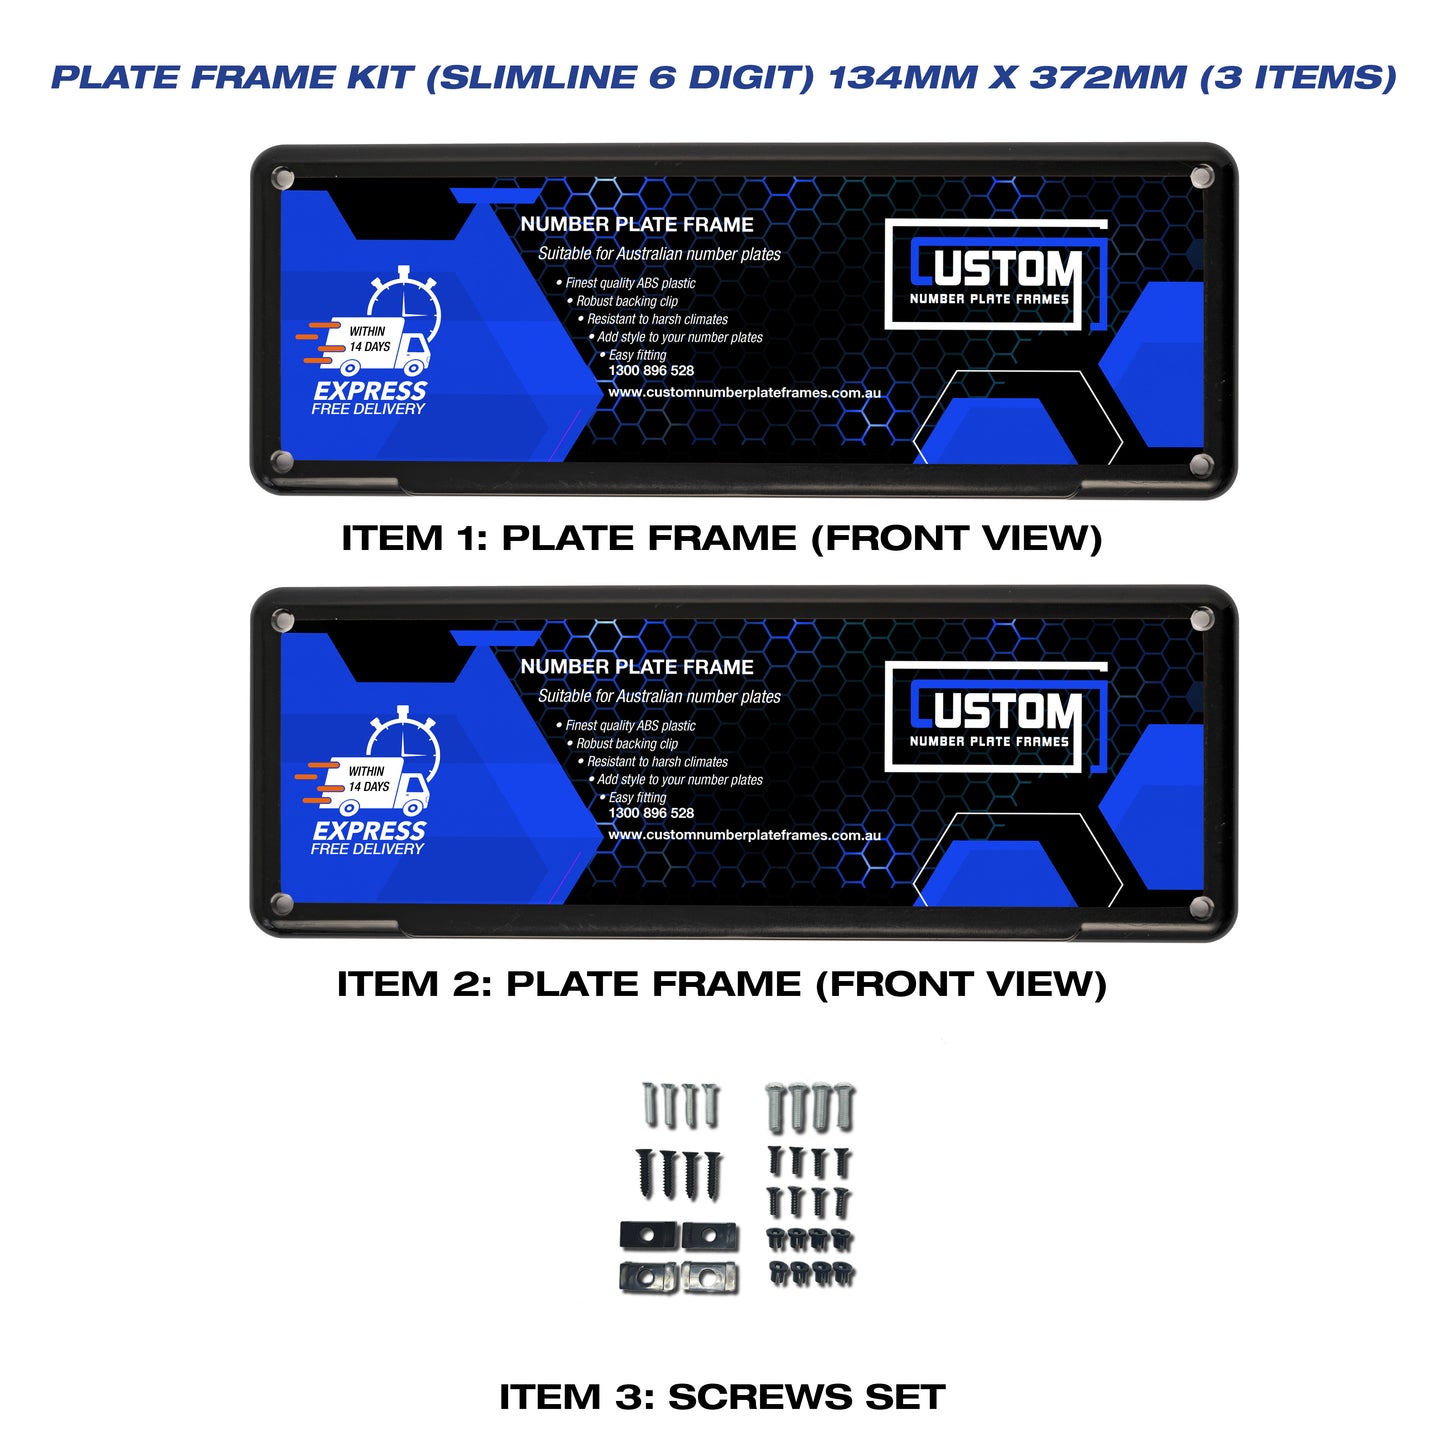 Plate Frame Kit 134mm x 372mm (Standard 6 digit) Suitable for: All States. - CUSTOM NUMBER PLATE FRAMES